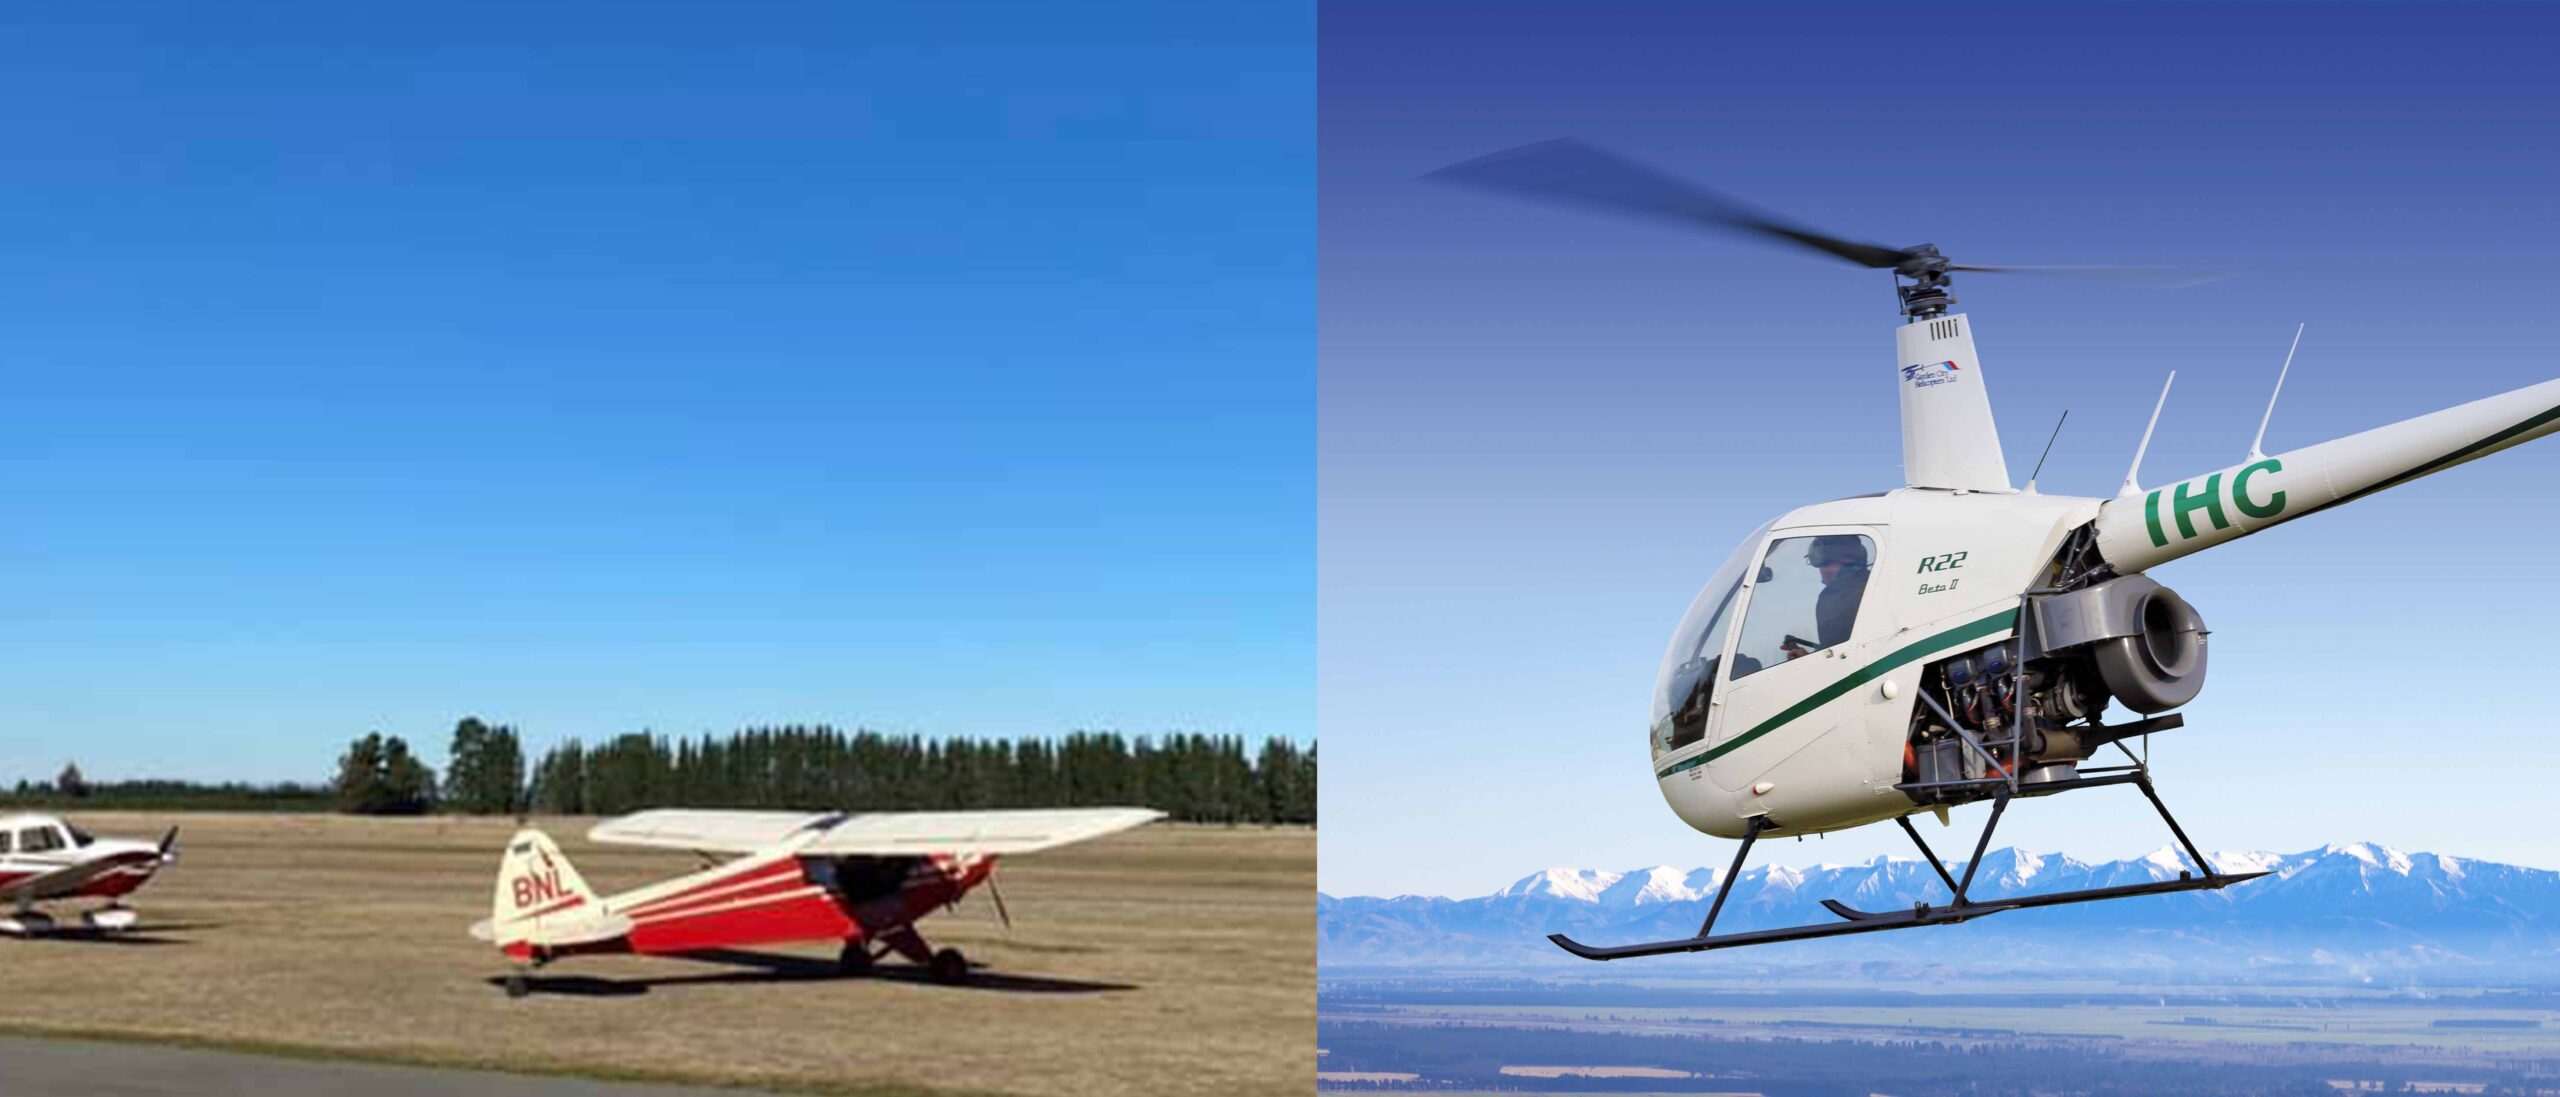 Aeroplane and helicopter